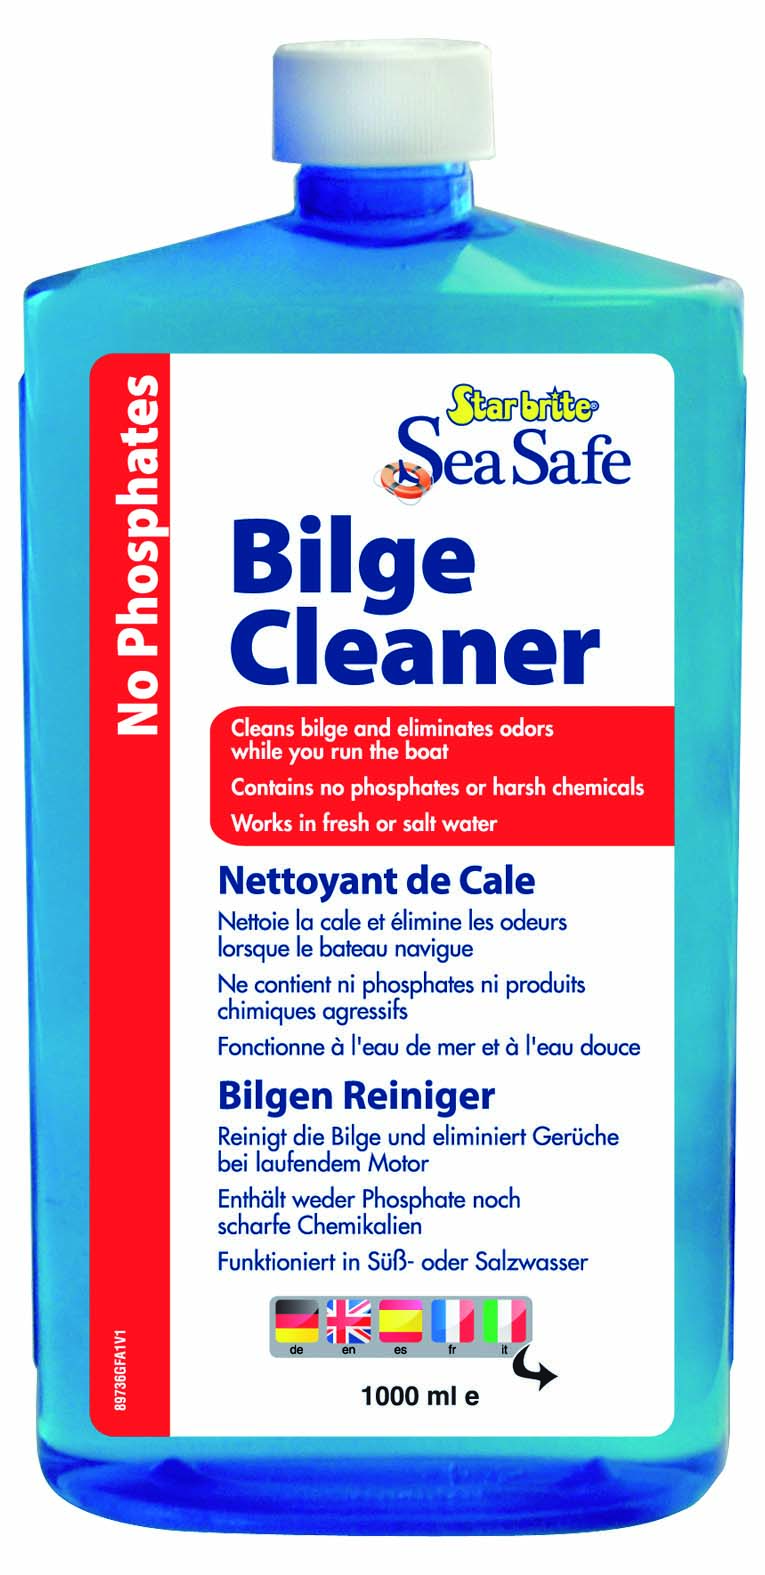 Star Brite Bilge Cleaner